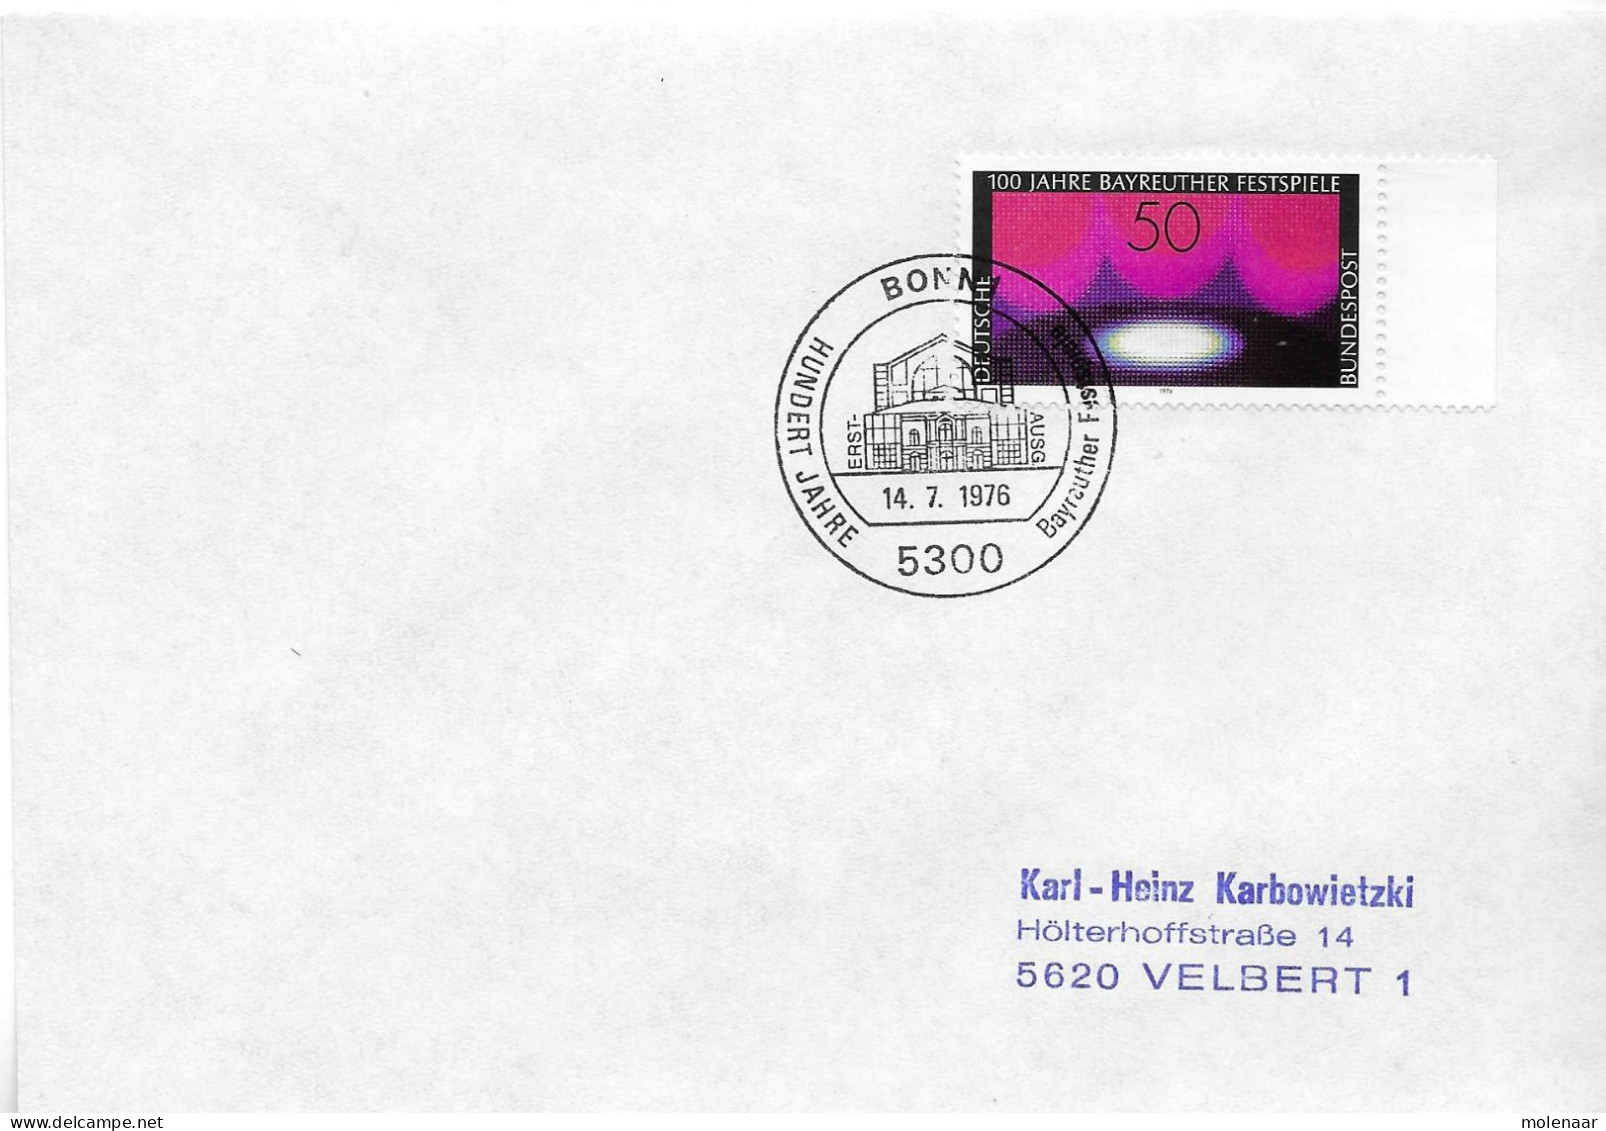 Postzegels > Europa > Duitsland > West-Duitsland > 1970-1979 > Brief Met No. 896  (17378) - Covers & Documents